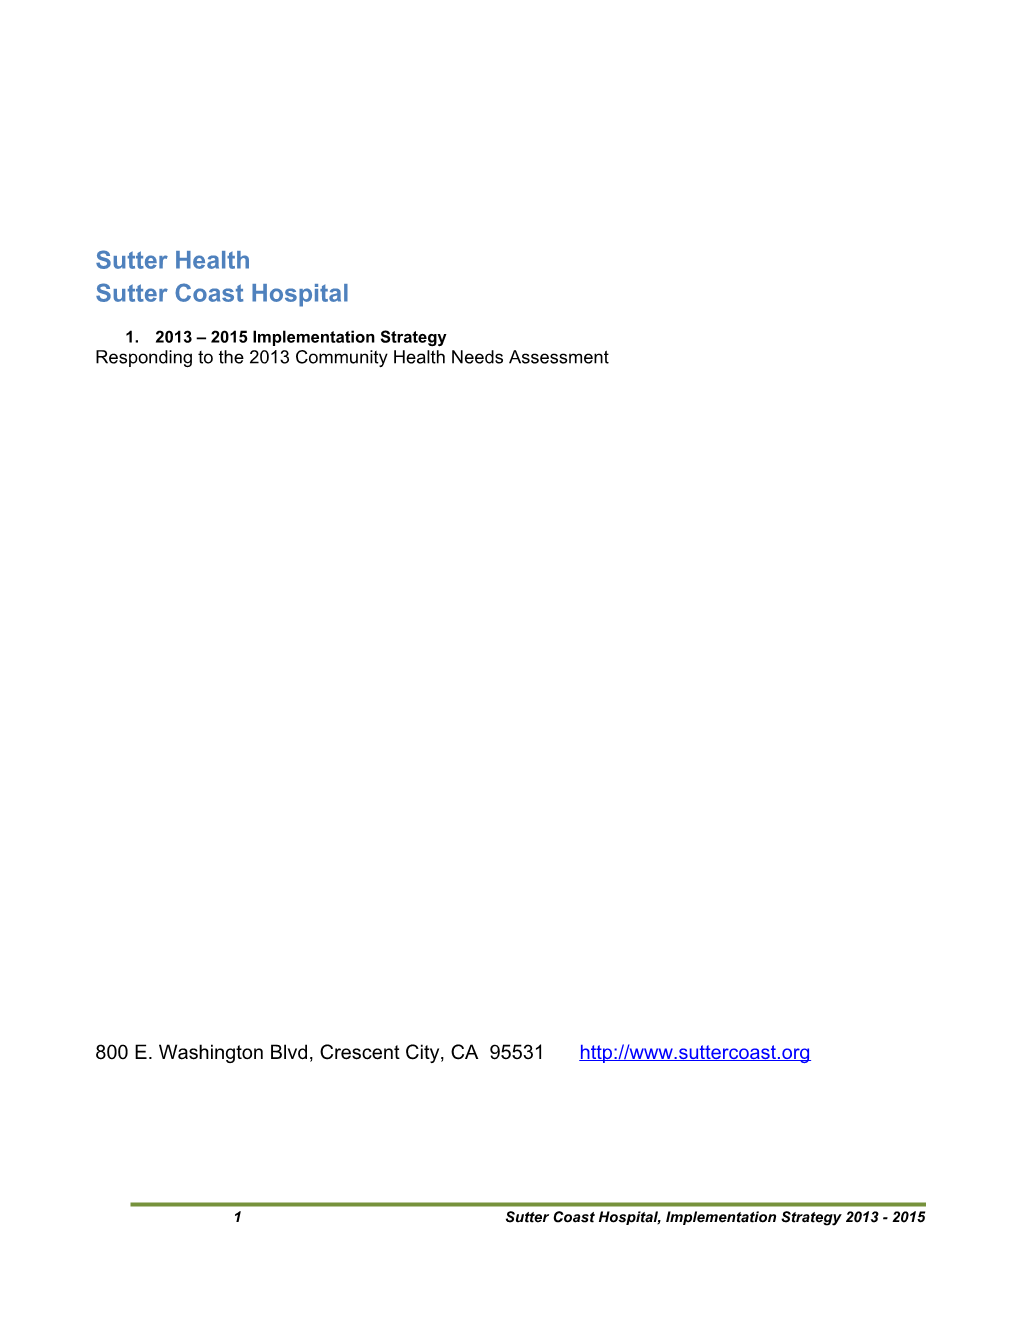 Sutter Health Sutter Coast Hospital 2013-2015 Implementation Strategy